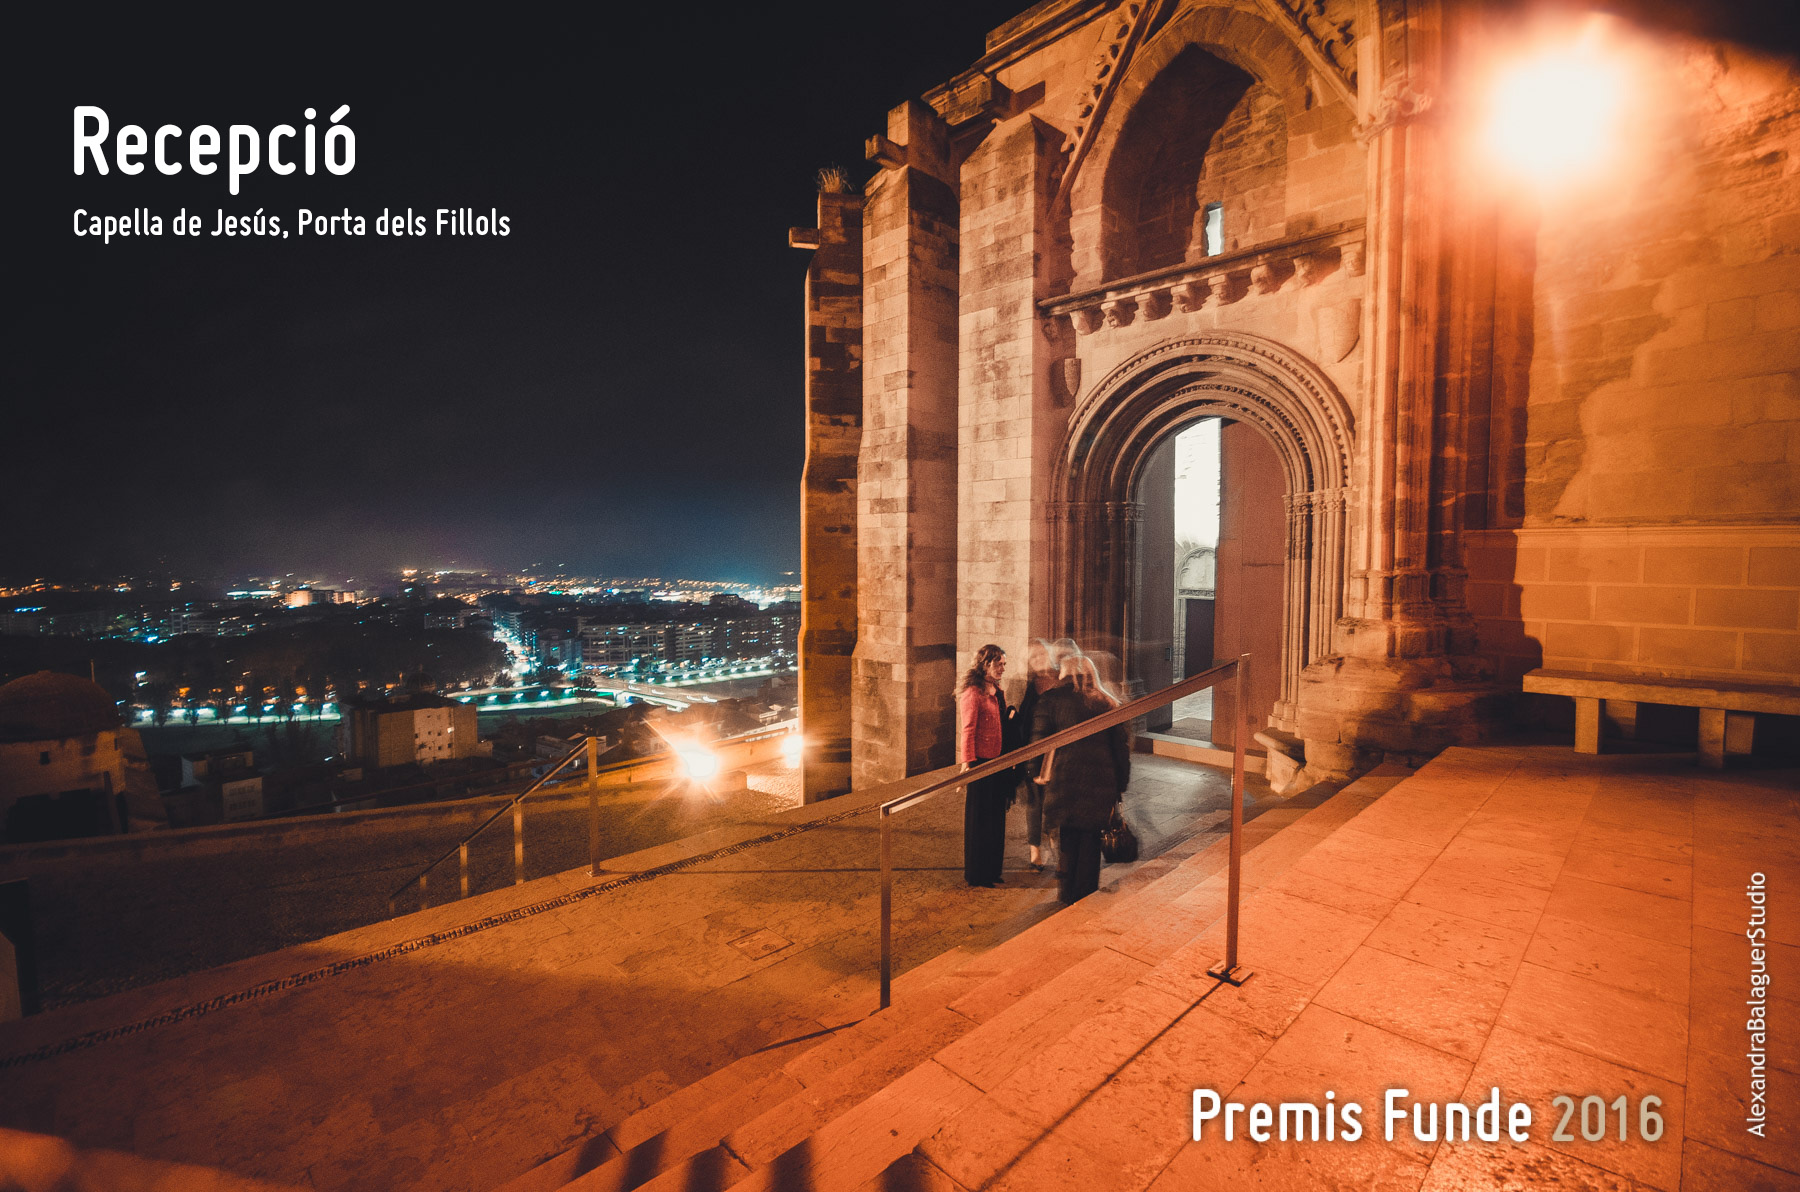 Premios Funde 2015